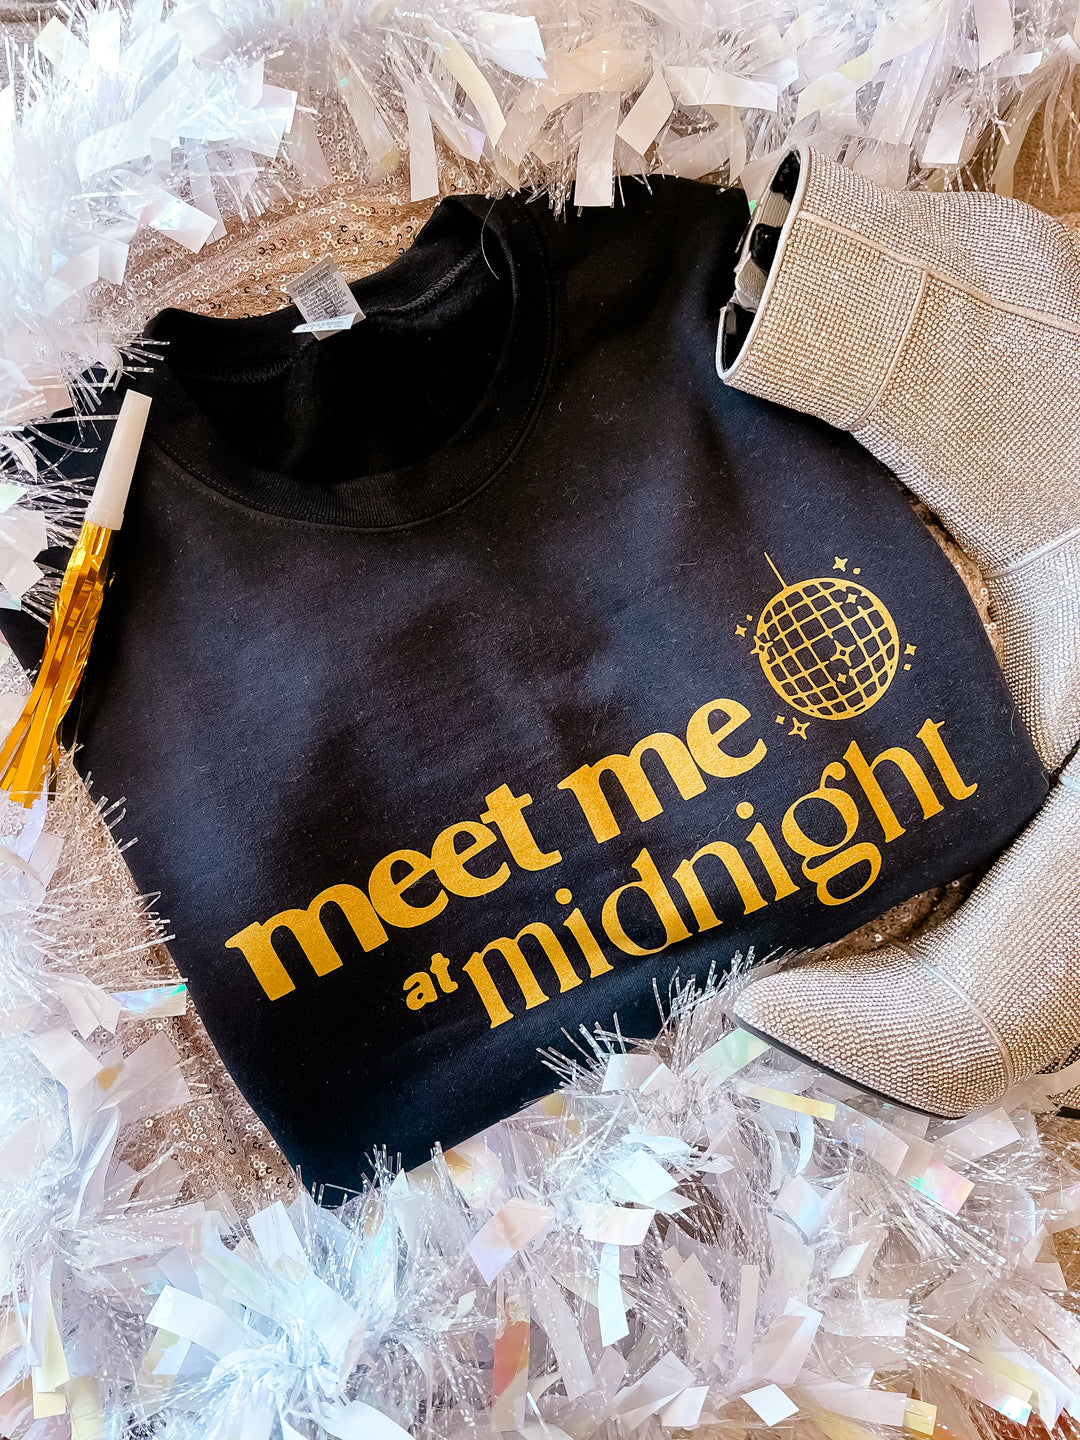 The 'Meet Me At Midnight' Sweatshirt